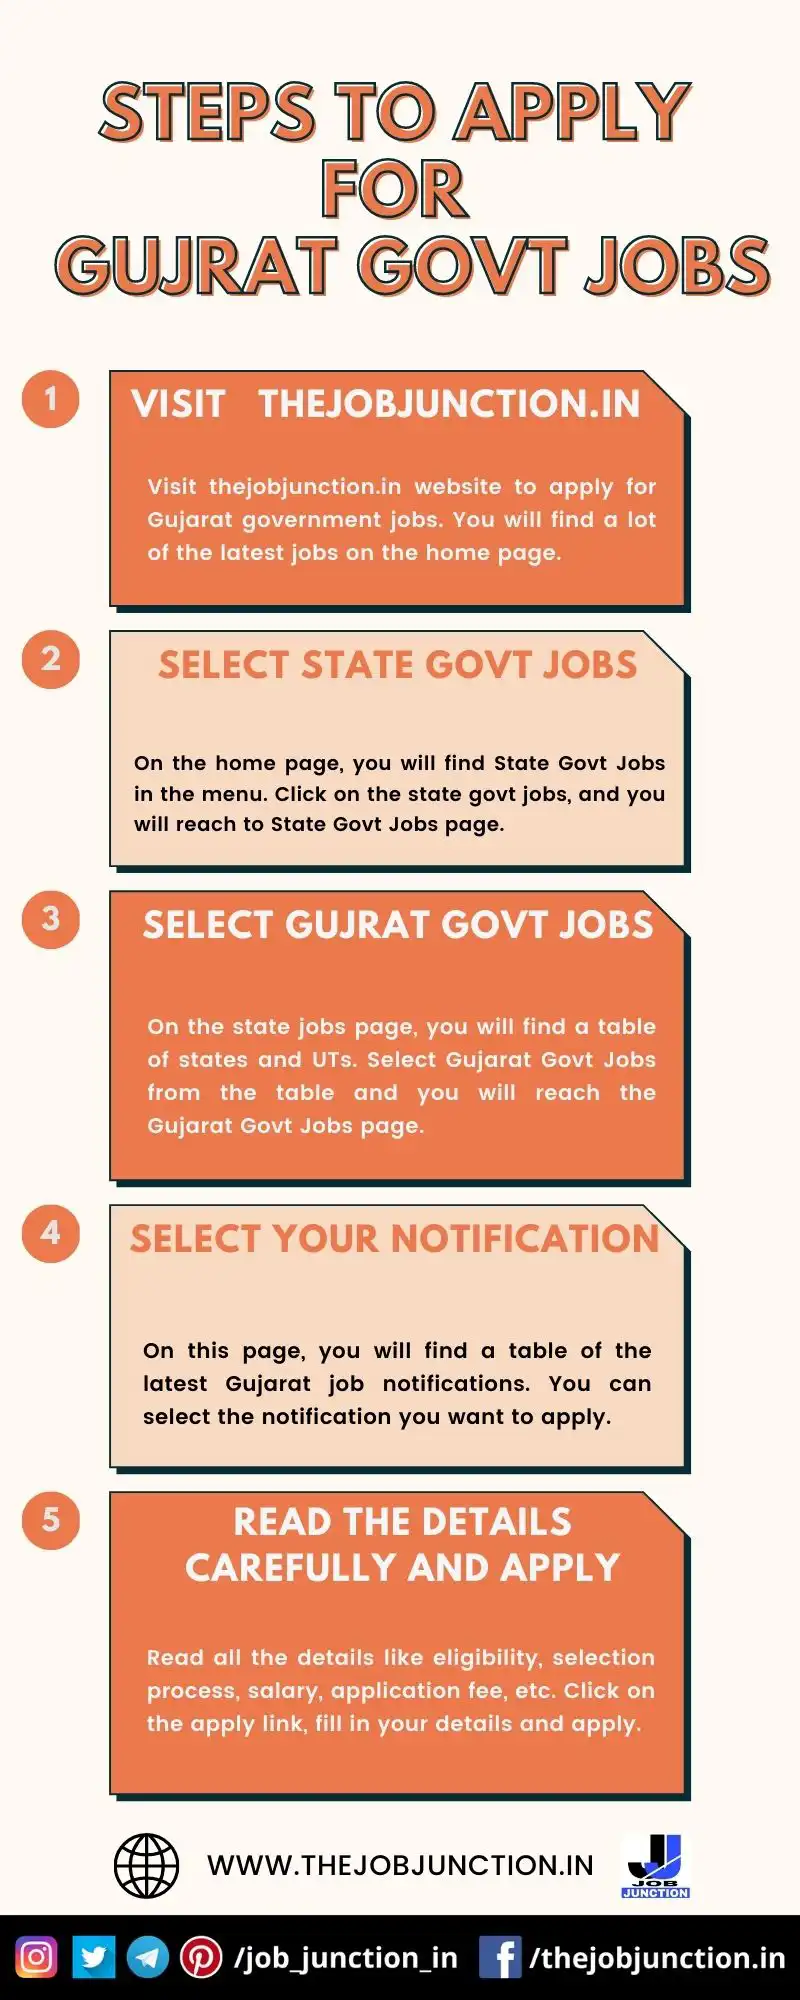 STEPS TO APPLY FOR GUJRAT GOVT JOBS